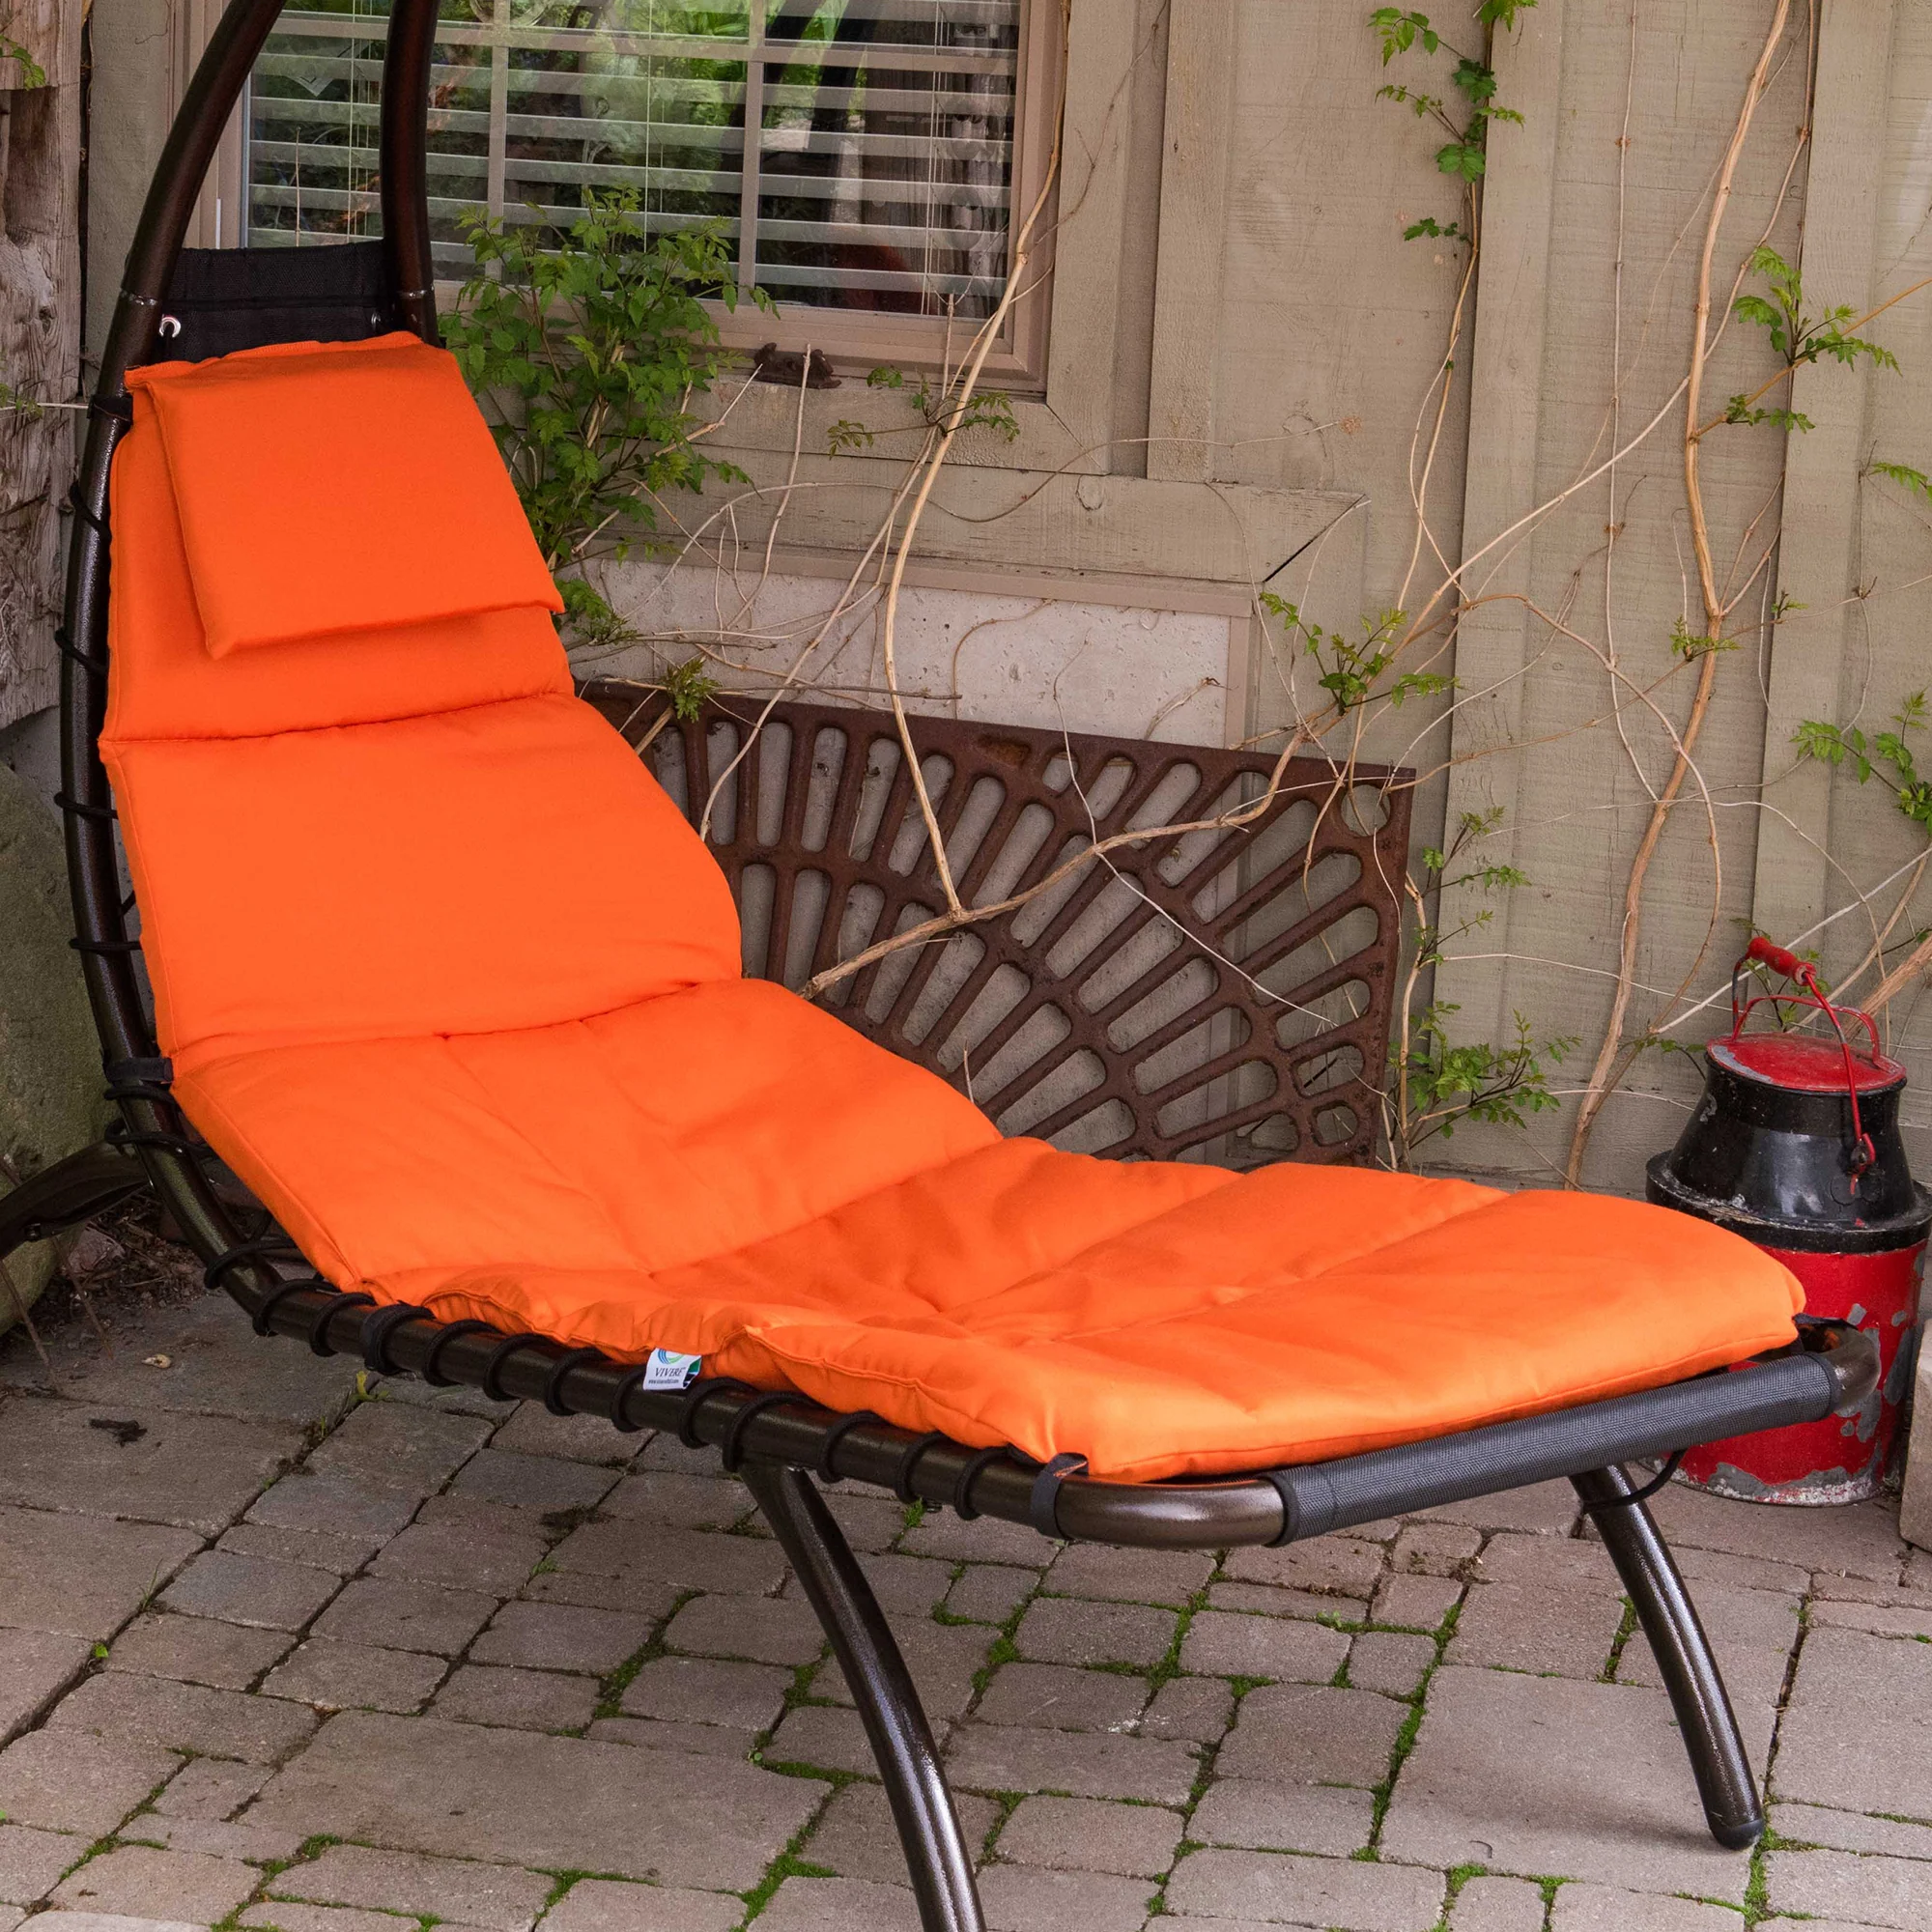 Vivere Original Dream Chair & Lounger Cushion Only - Orange Zest - Item DRMC-OZ